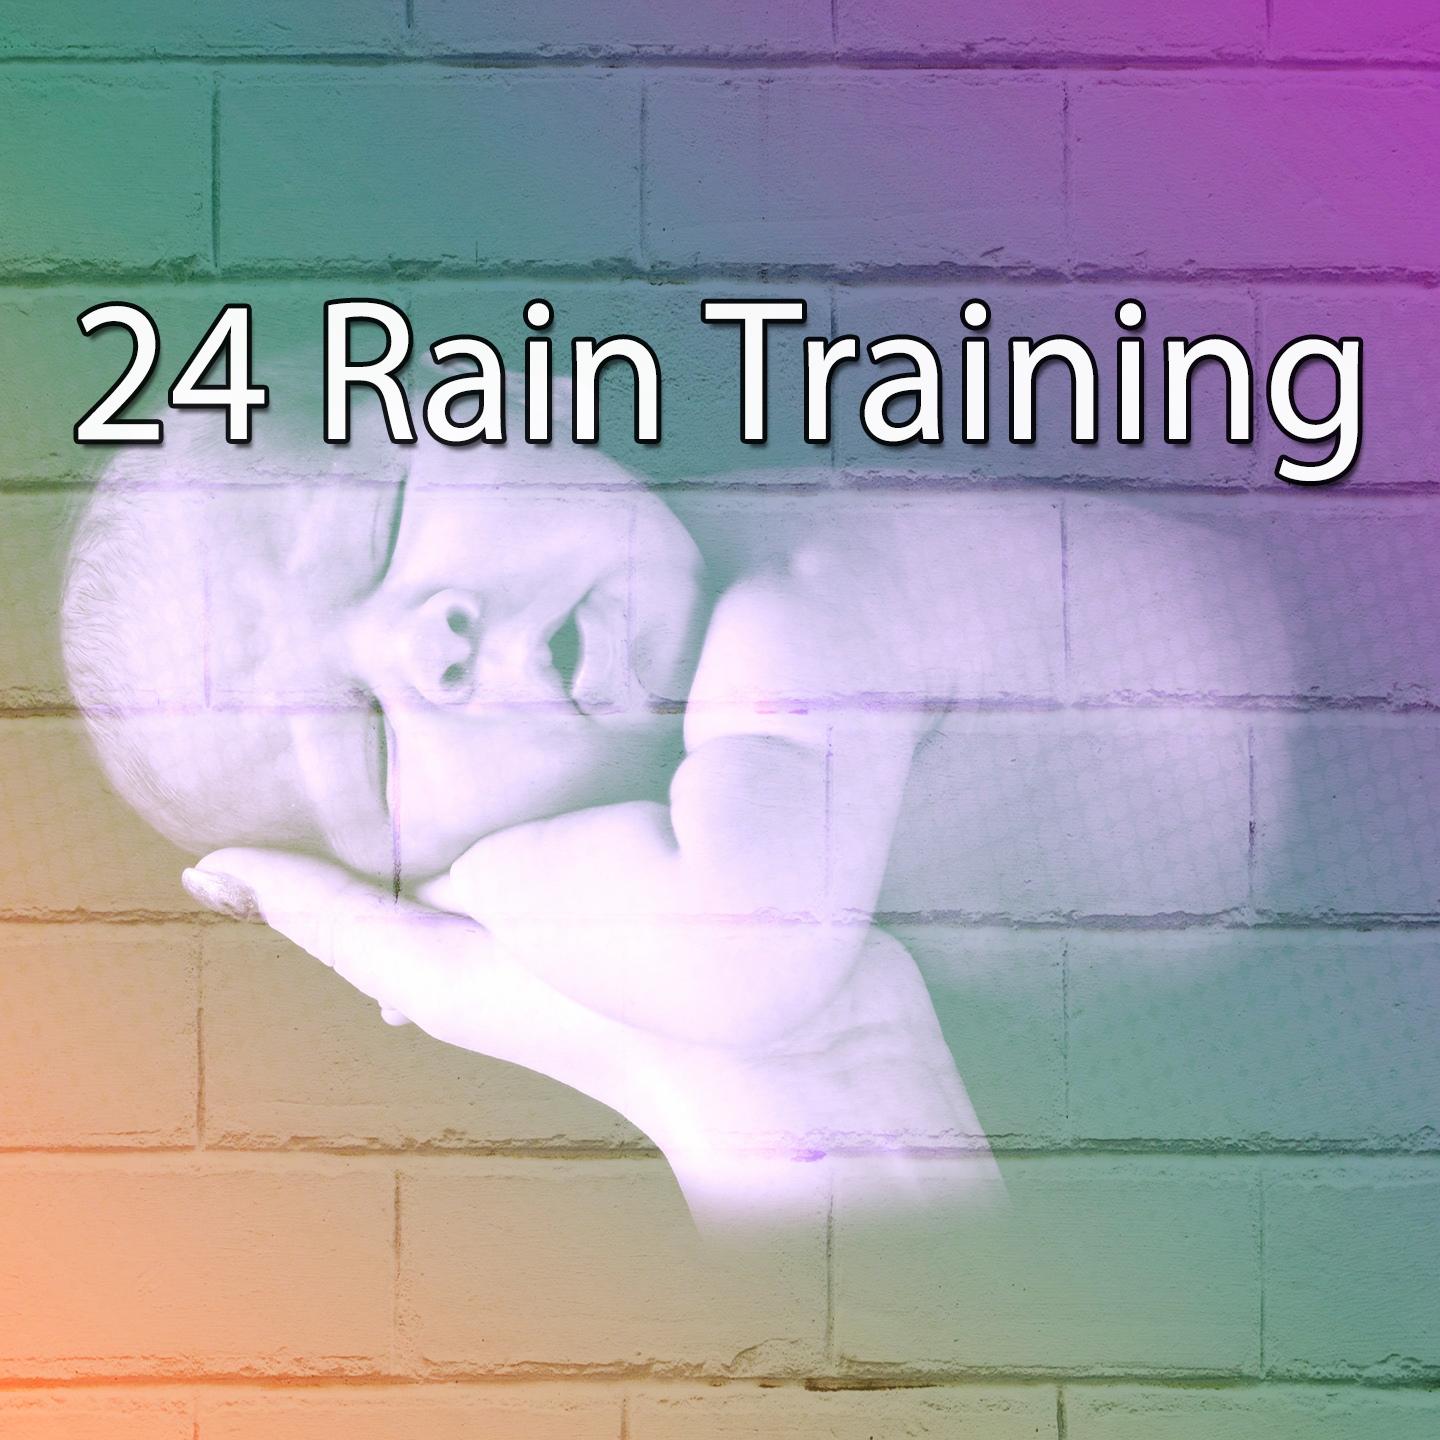 24 Rain Training